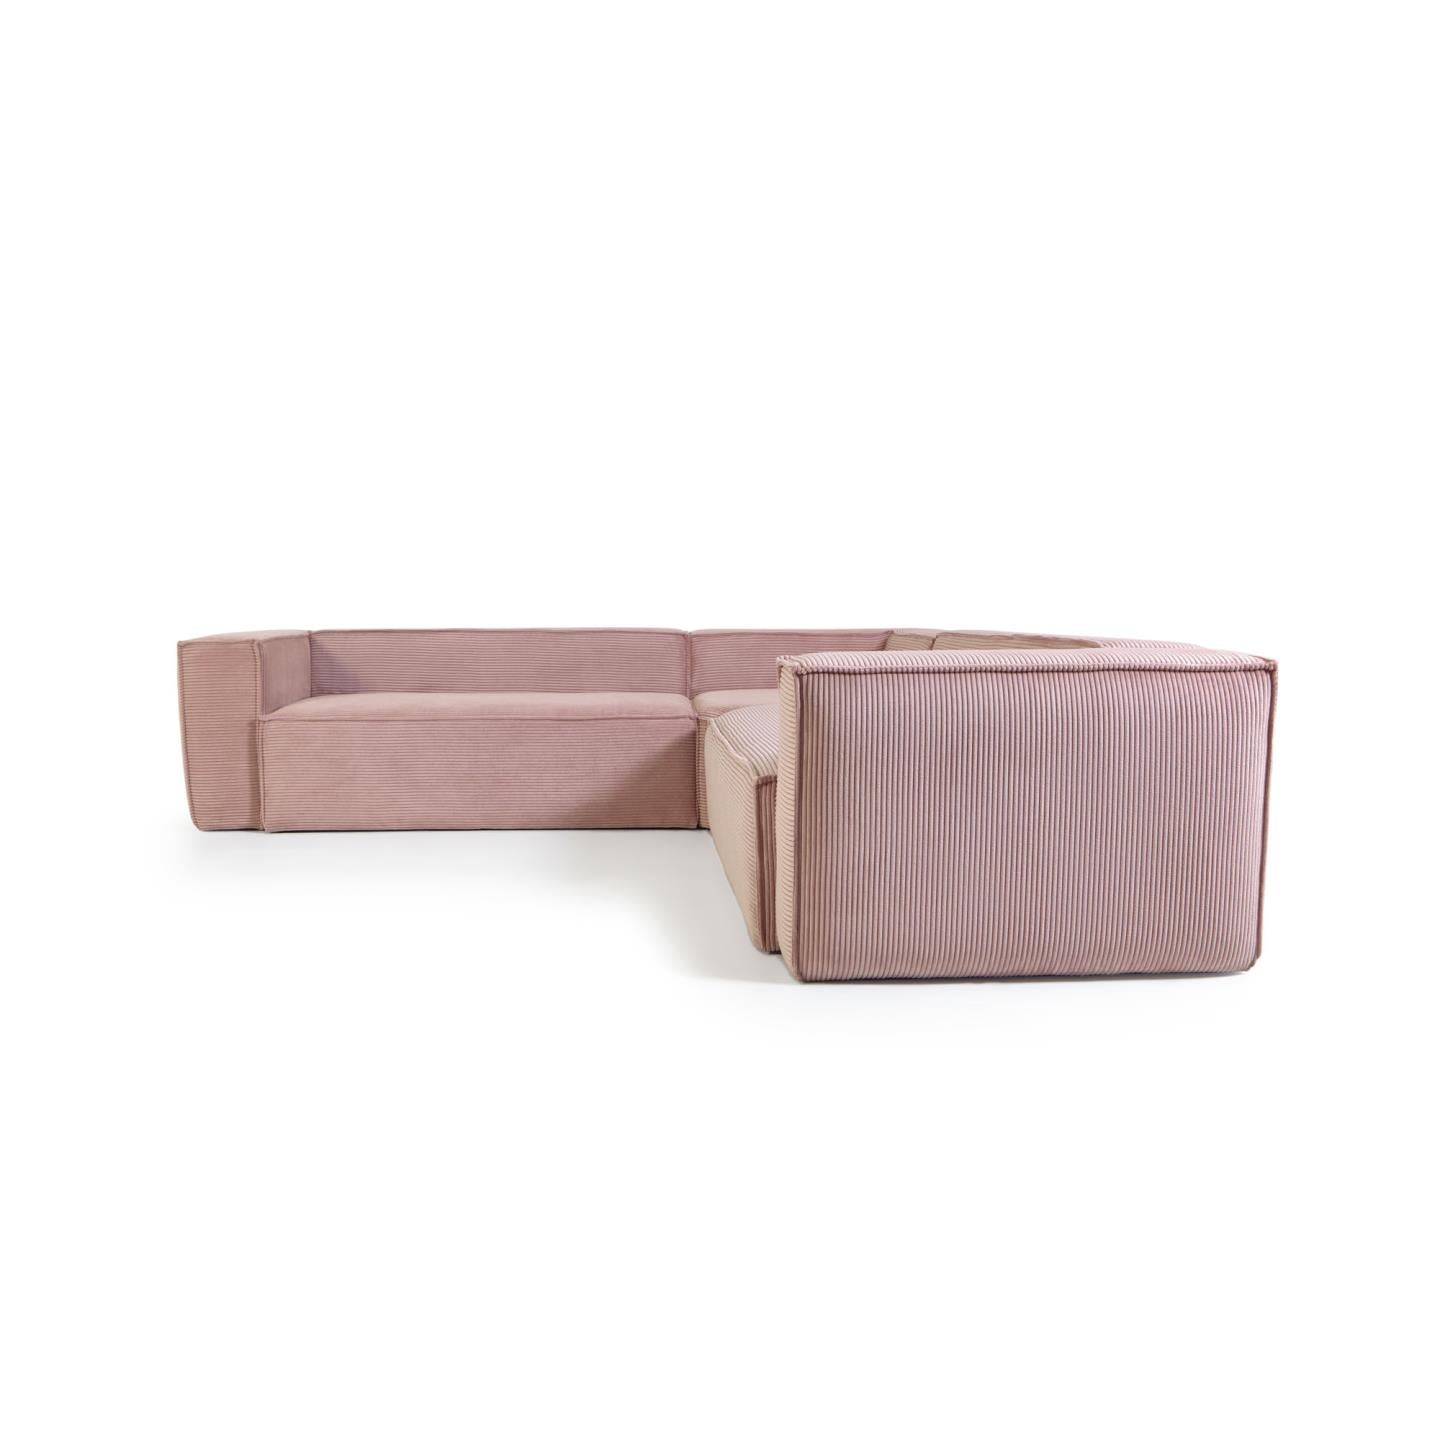 Blok 4 seater corner sofa in pink corduroy, 290 x 290 cm